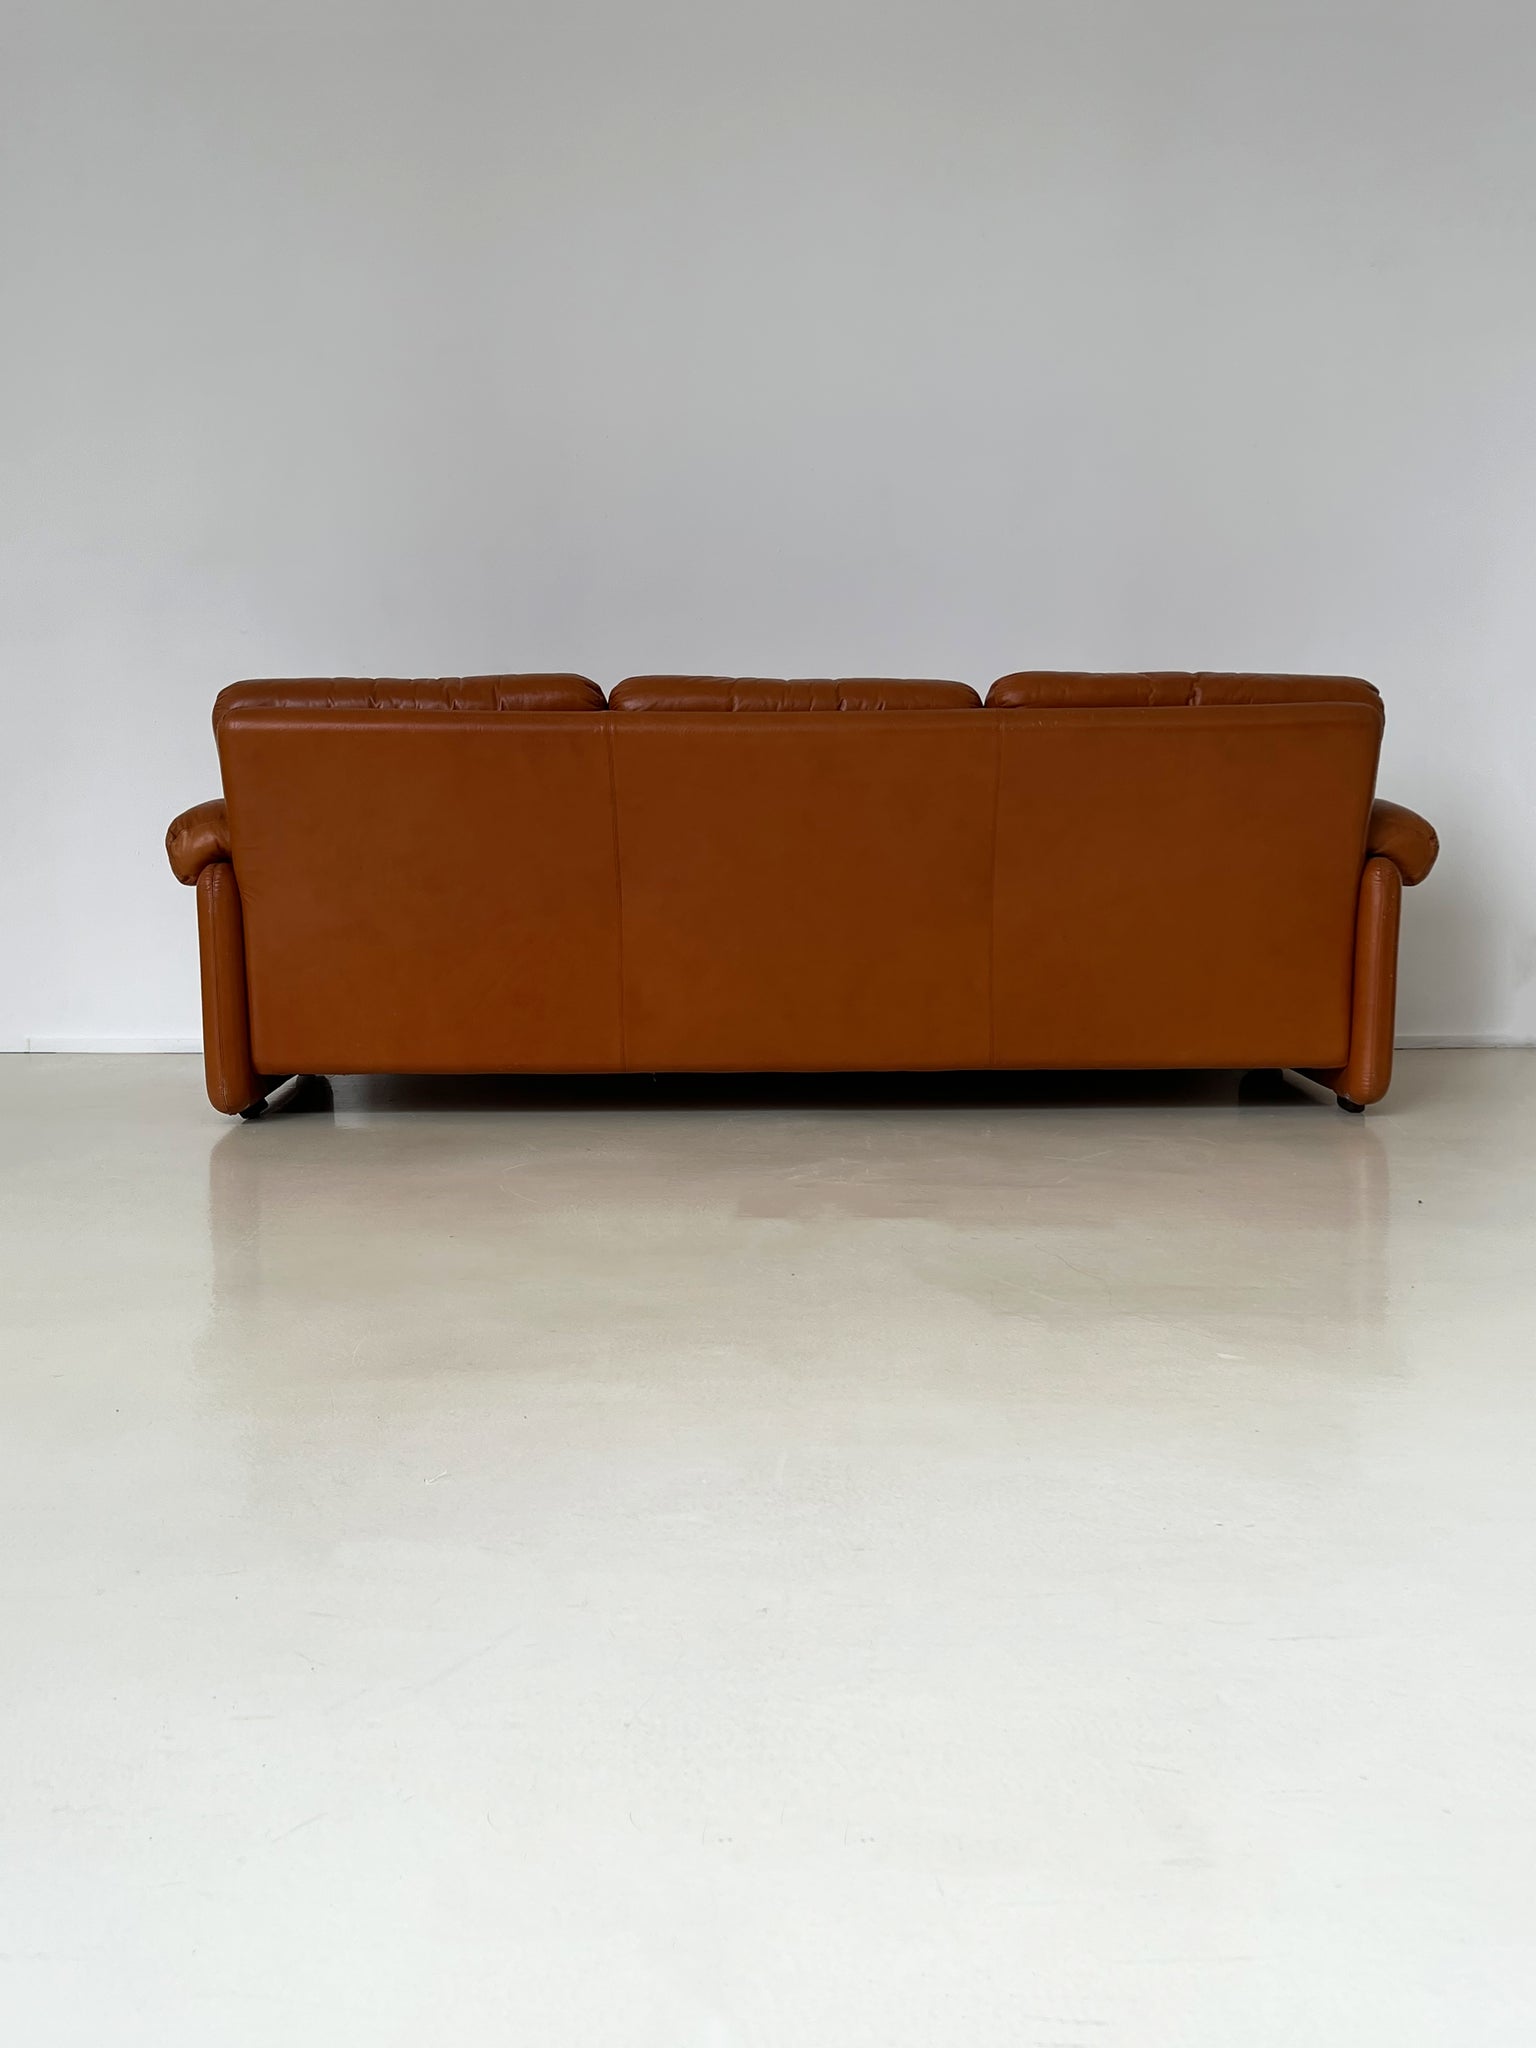 1960s Cognac Leather Coronado Sofa by Tobia for B&B Italia